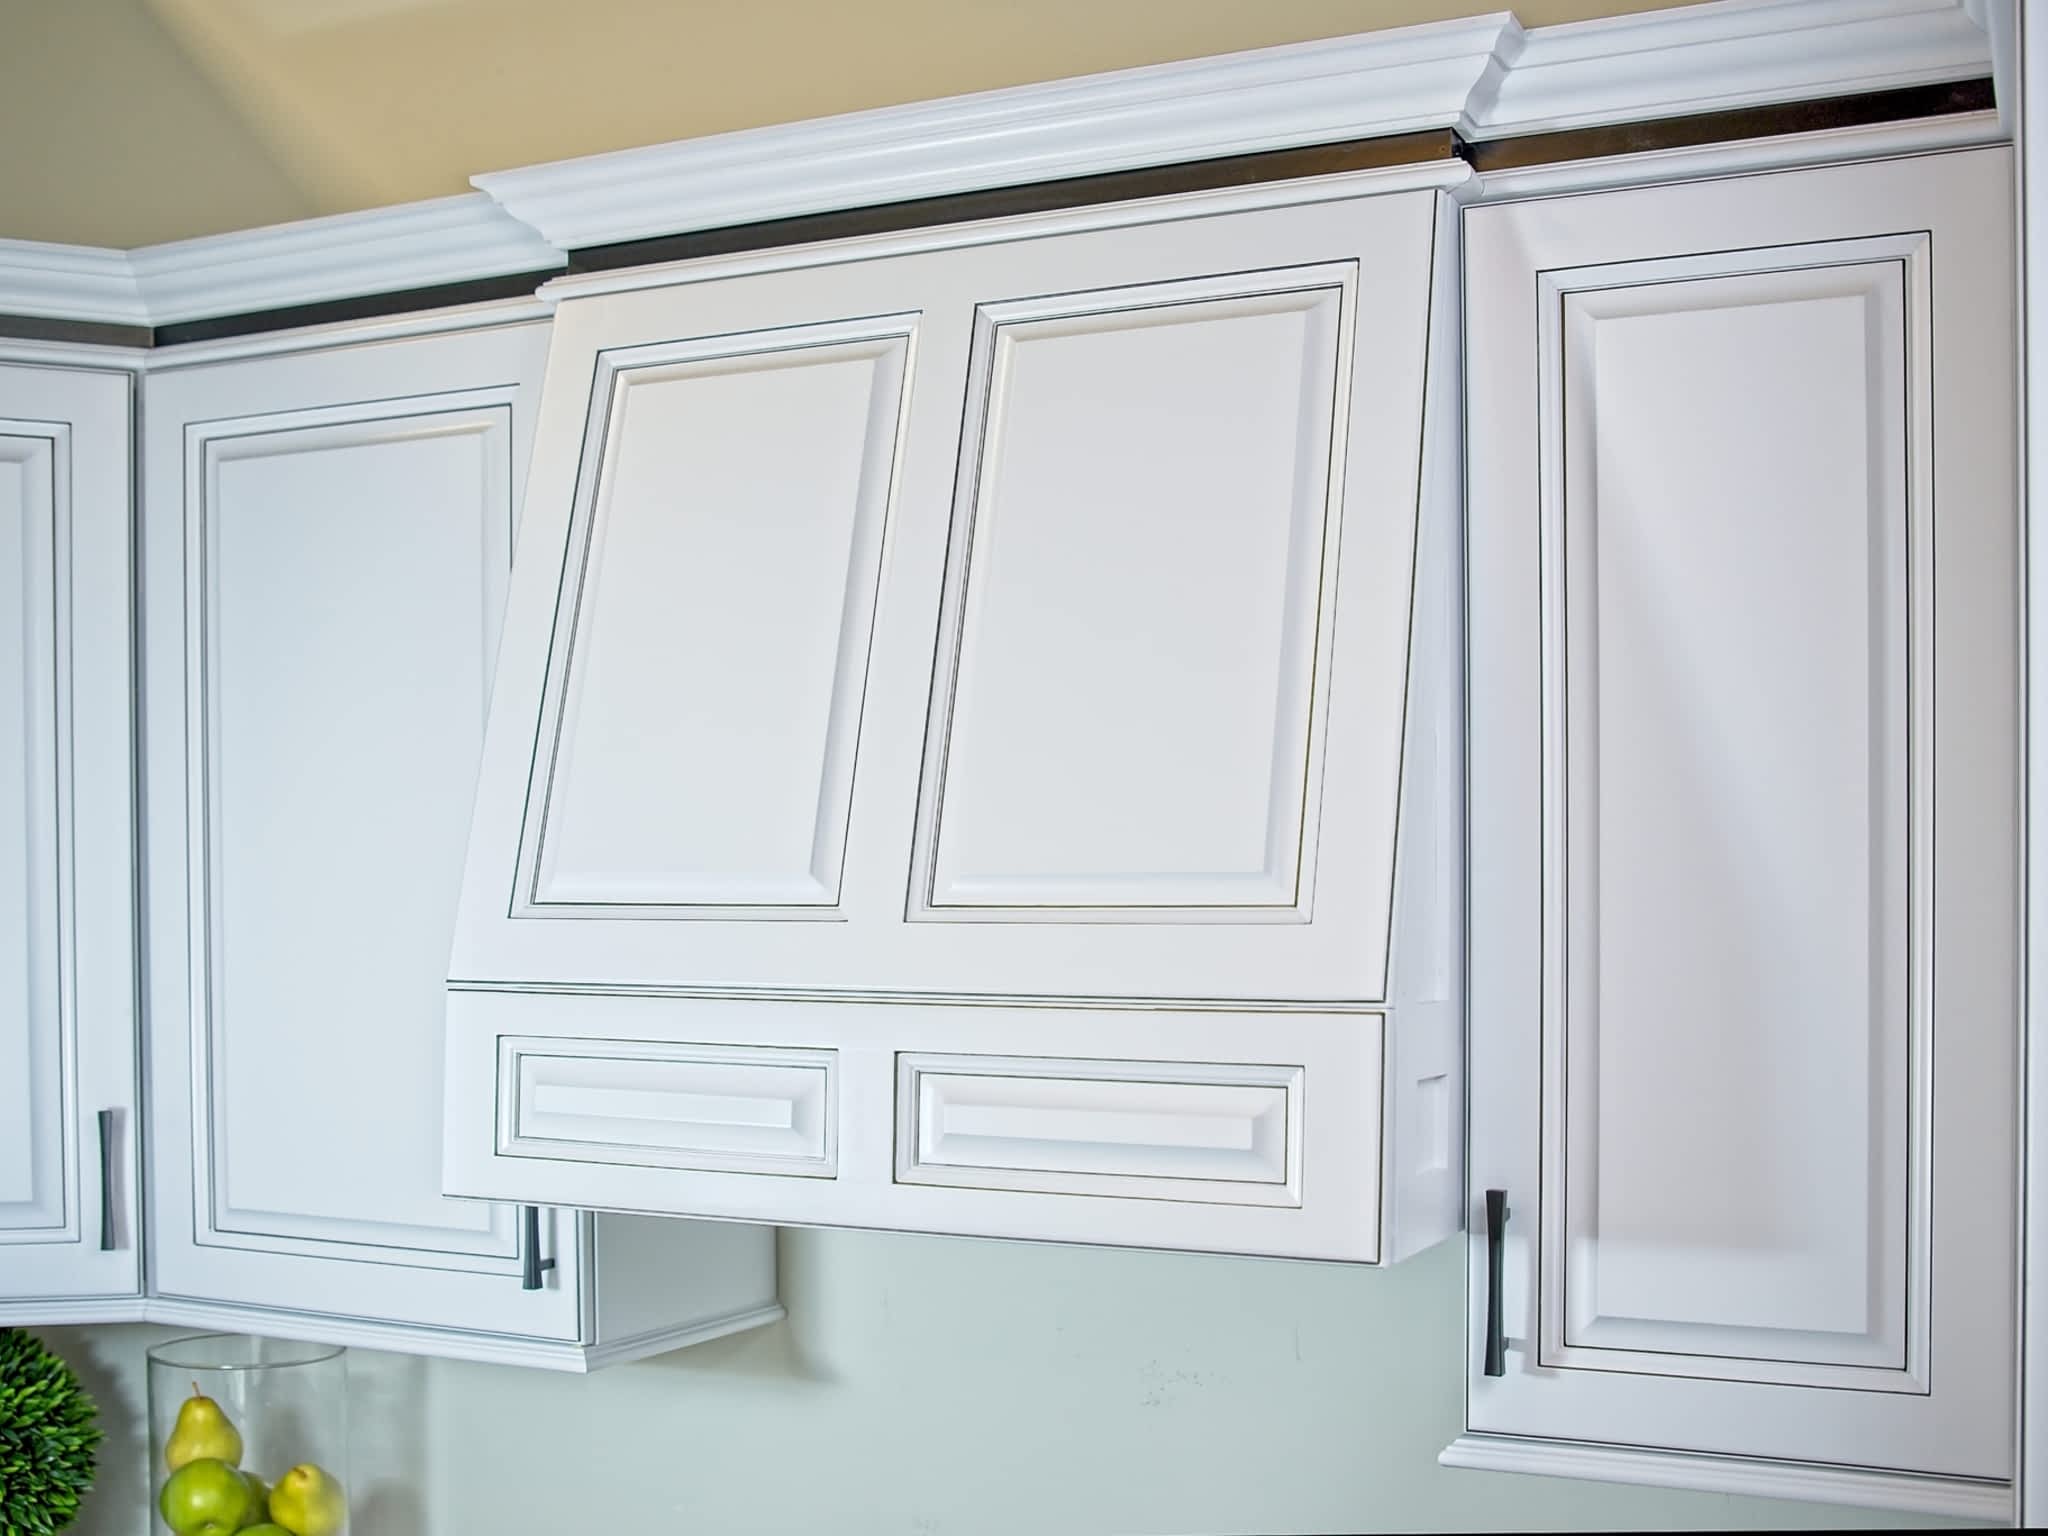 photo Prime Kitchen Cabinets Inc